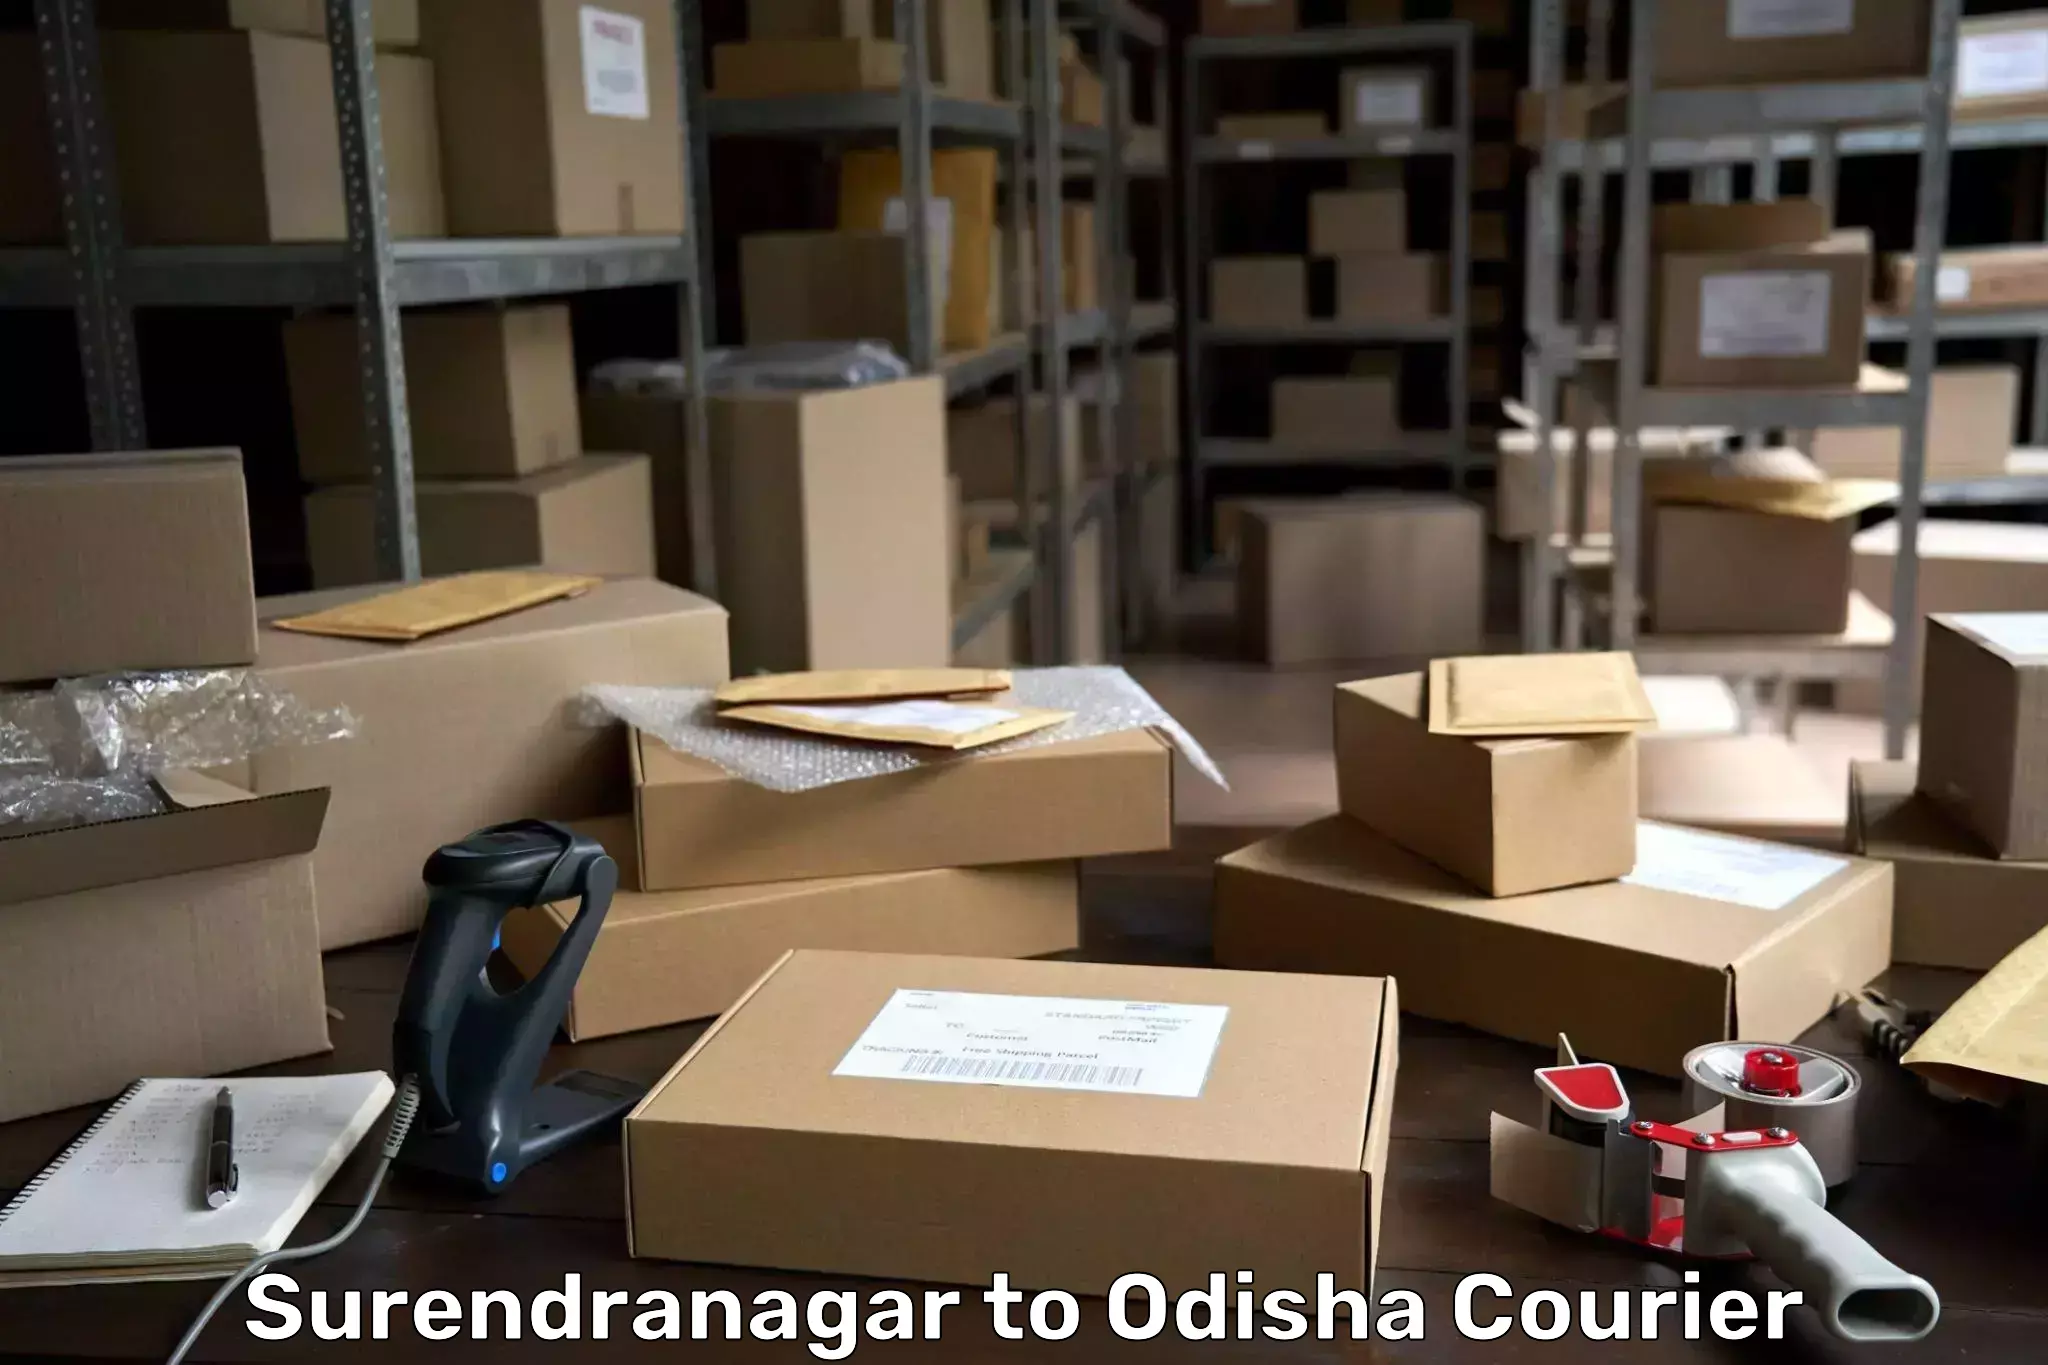 User-friendly delivery service Surendranagar to Odisha